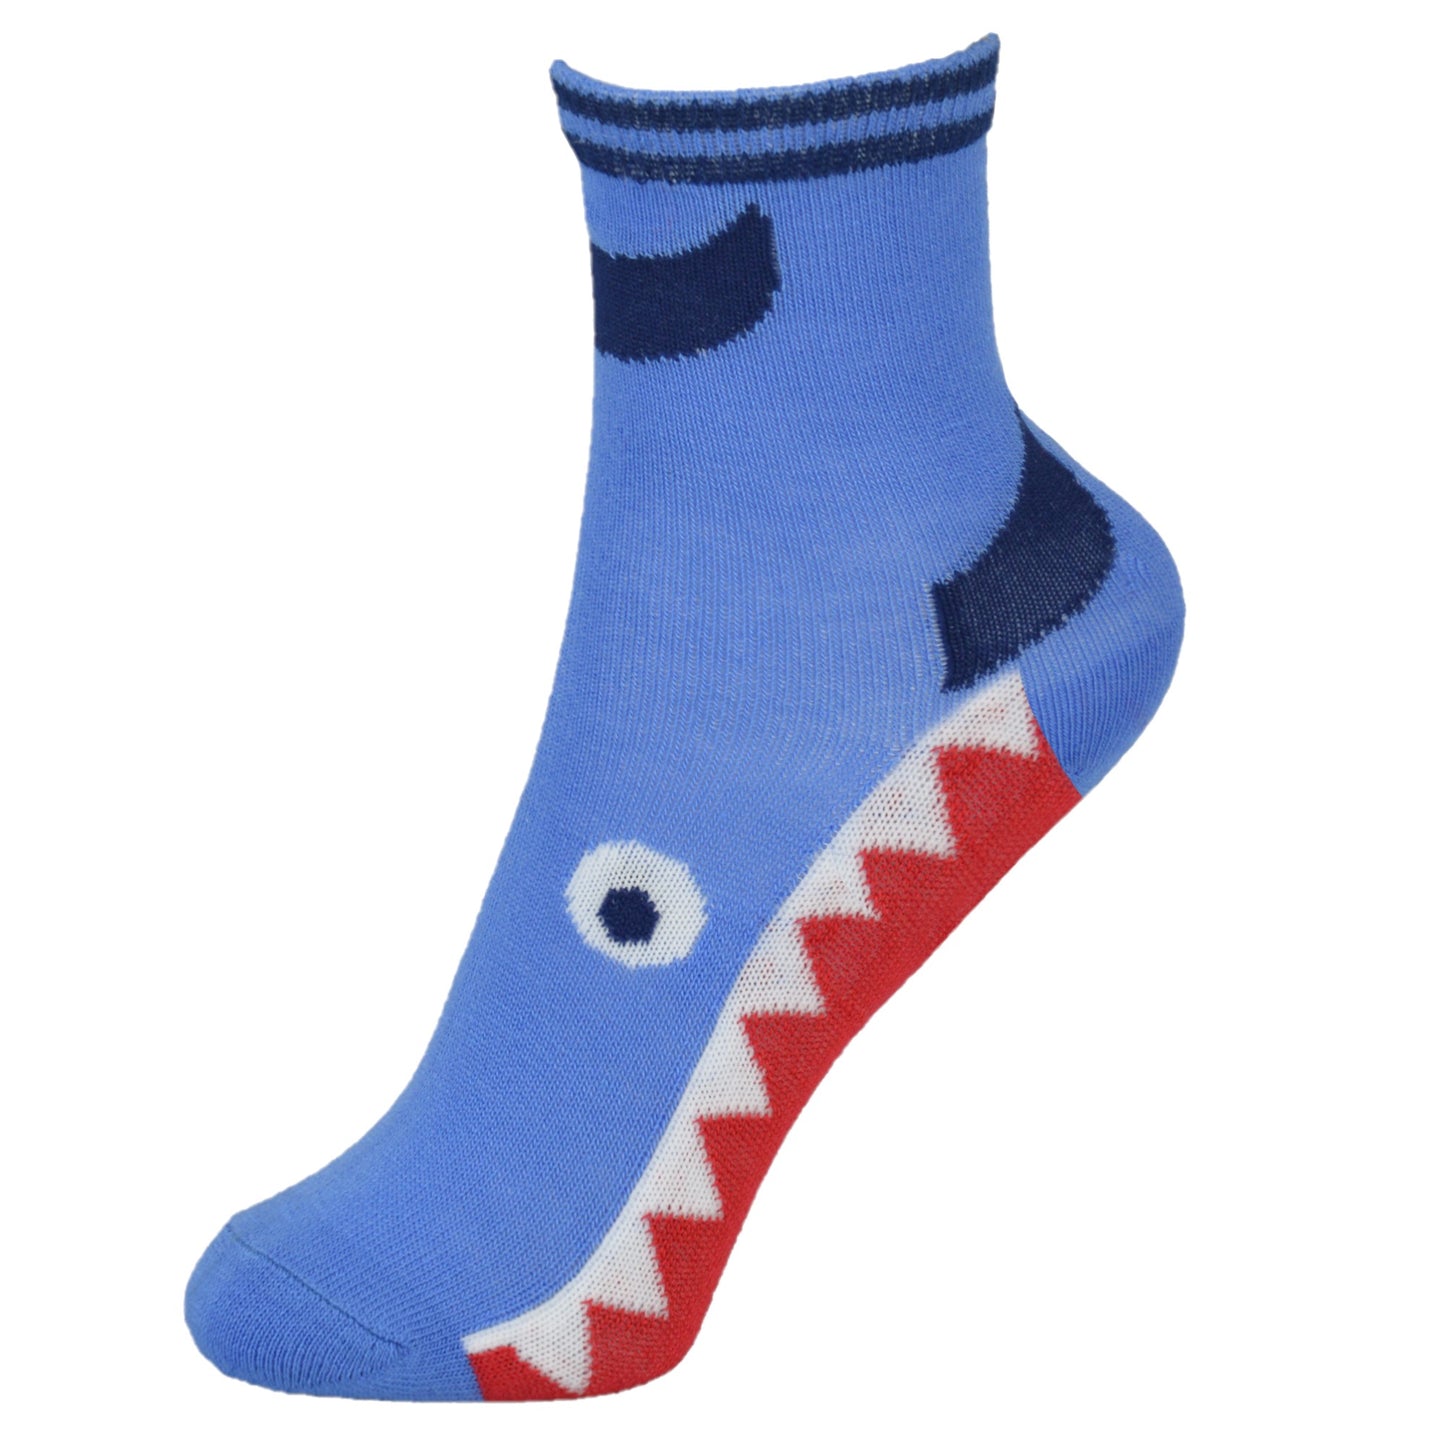 Boys Shark and Dinosaur Patterned Bamboo Multicoloured Ankle Socks - 6 Pairs